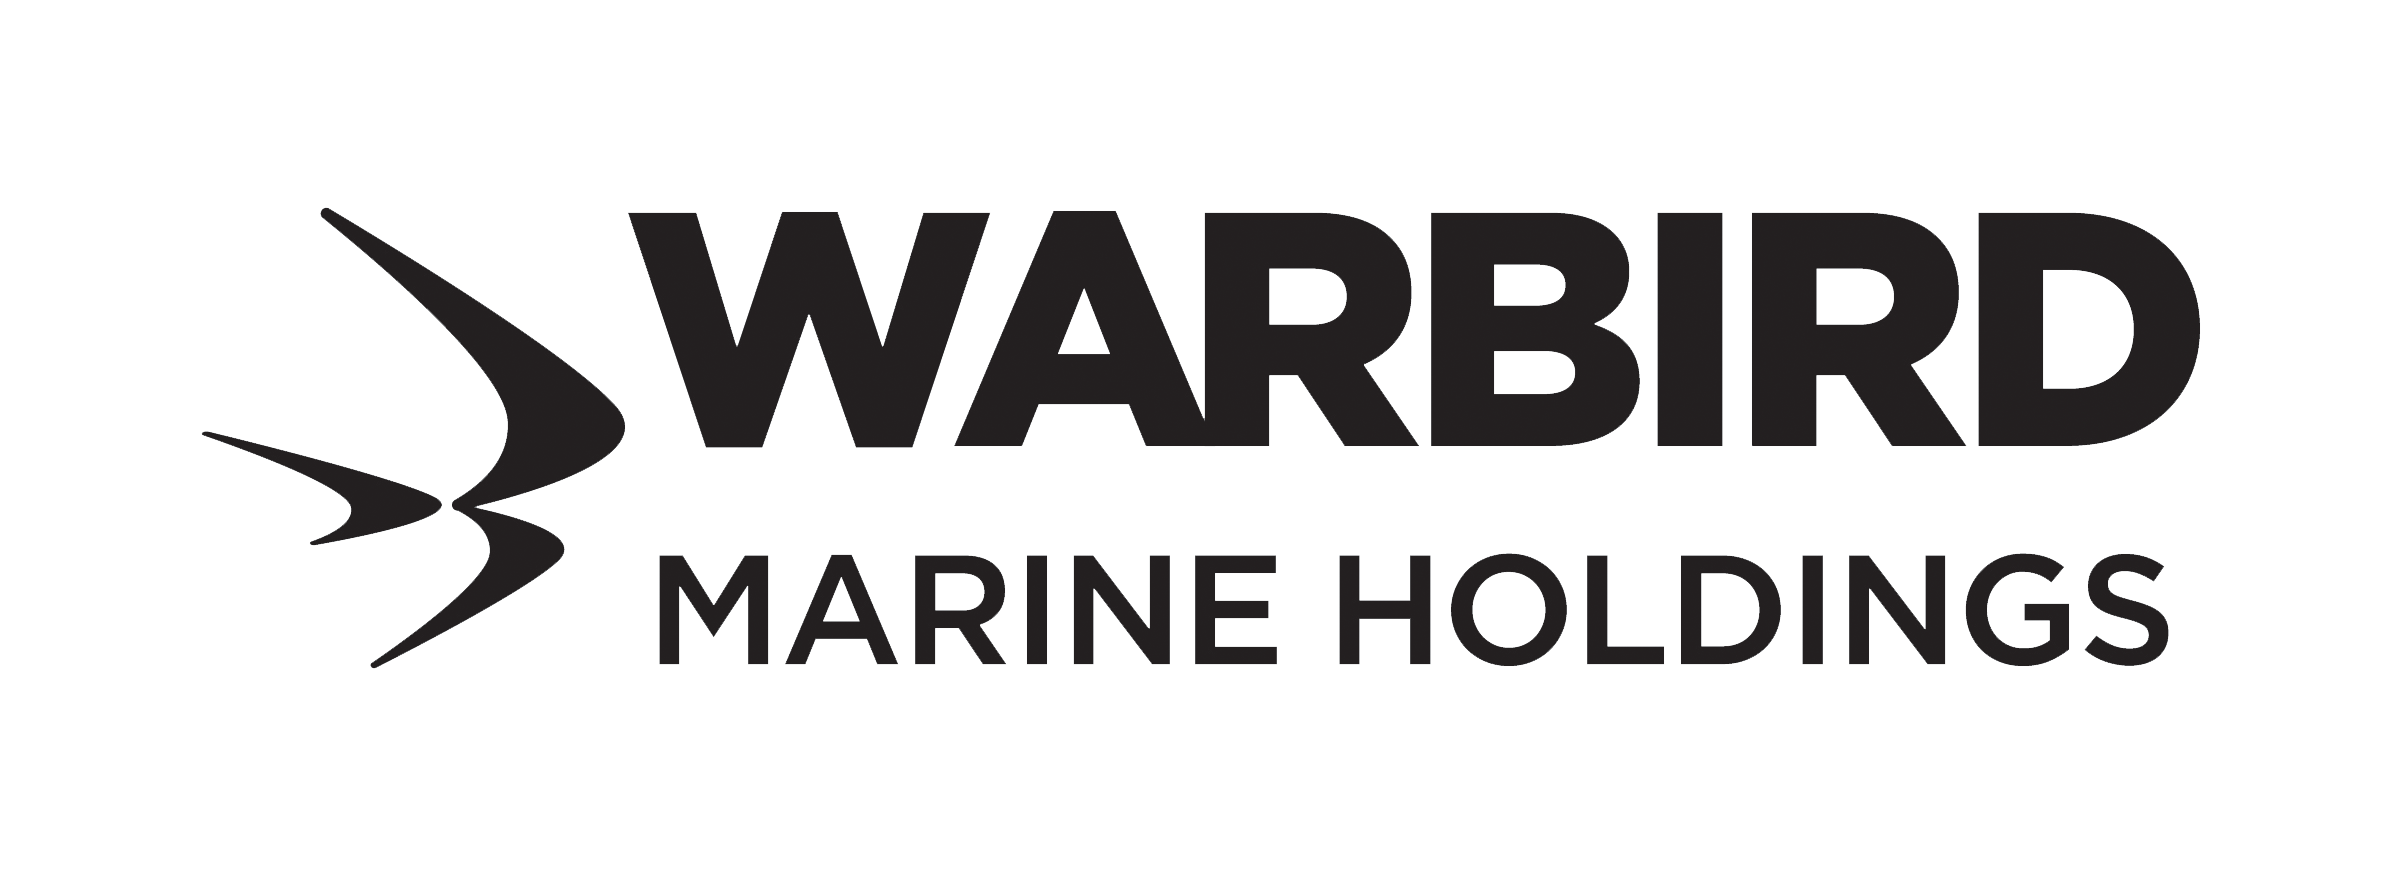 Warbird Marine Holdings logo